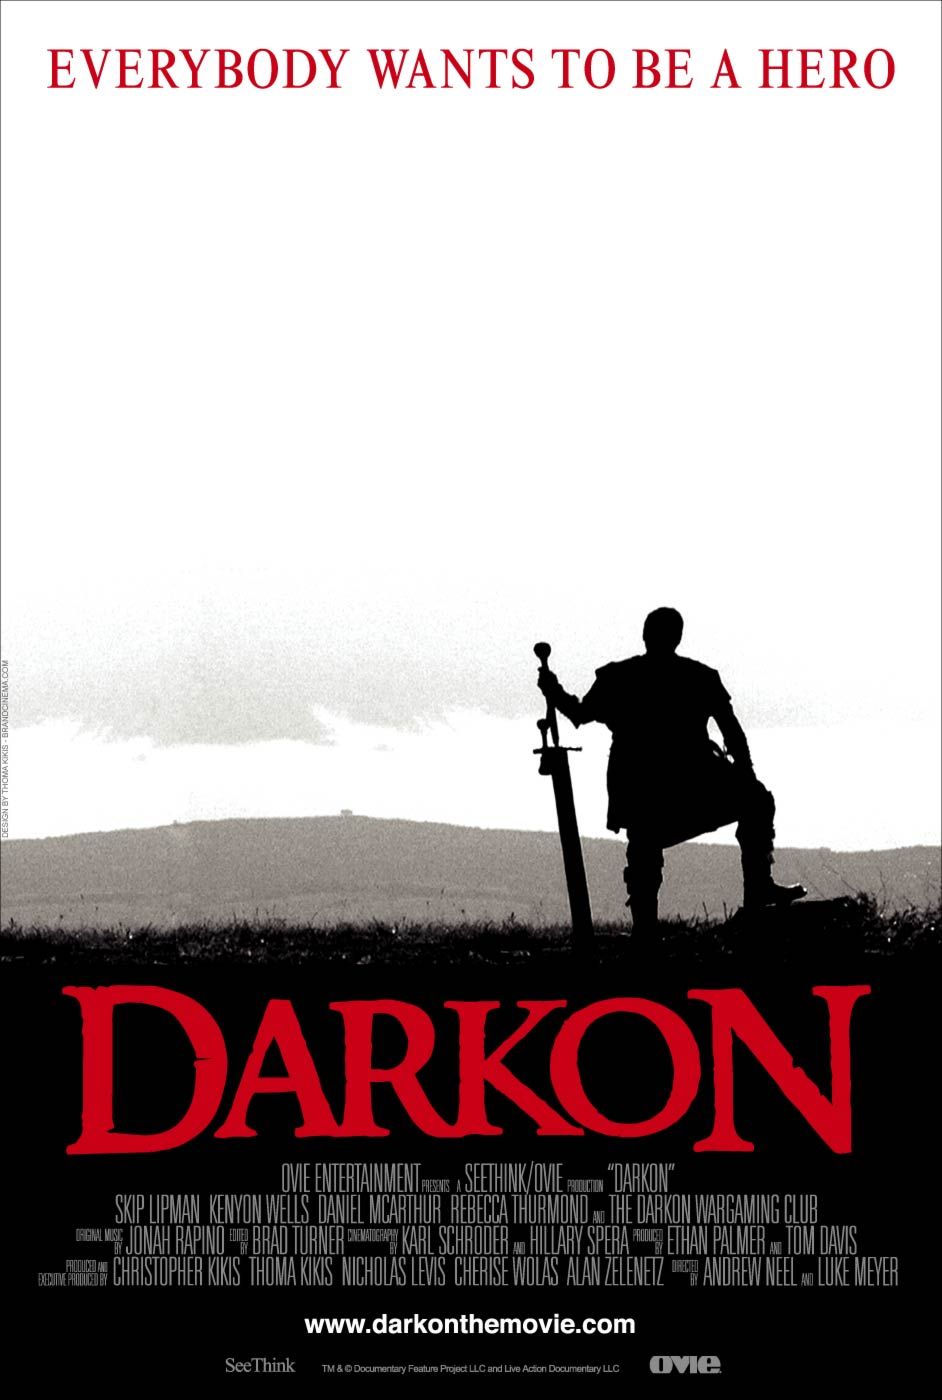 Extra Large Movie Poster Image for Darkon 